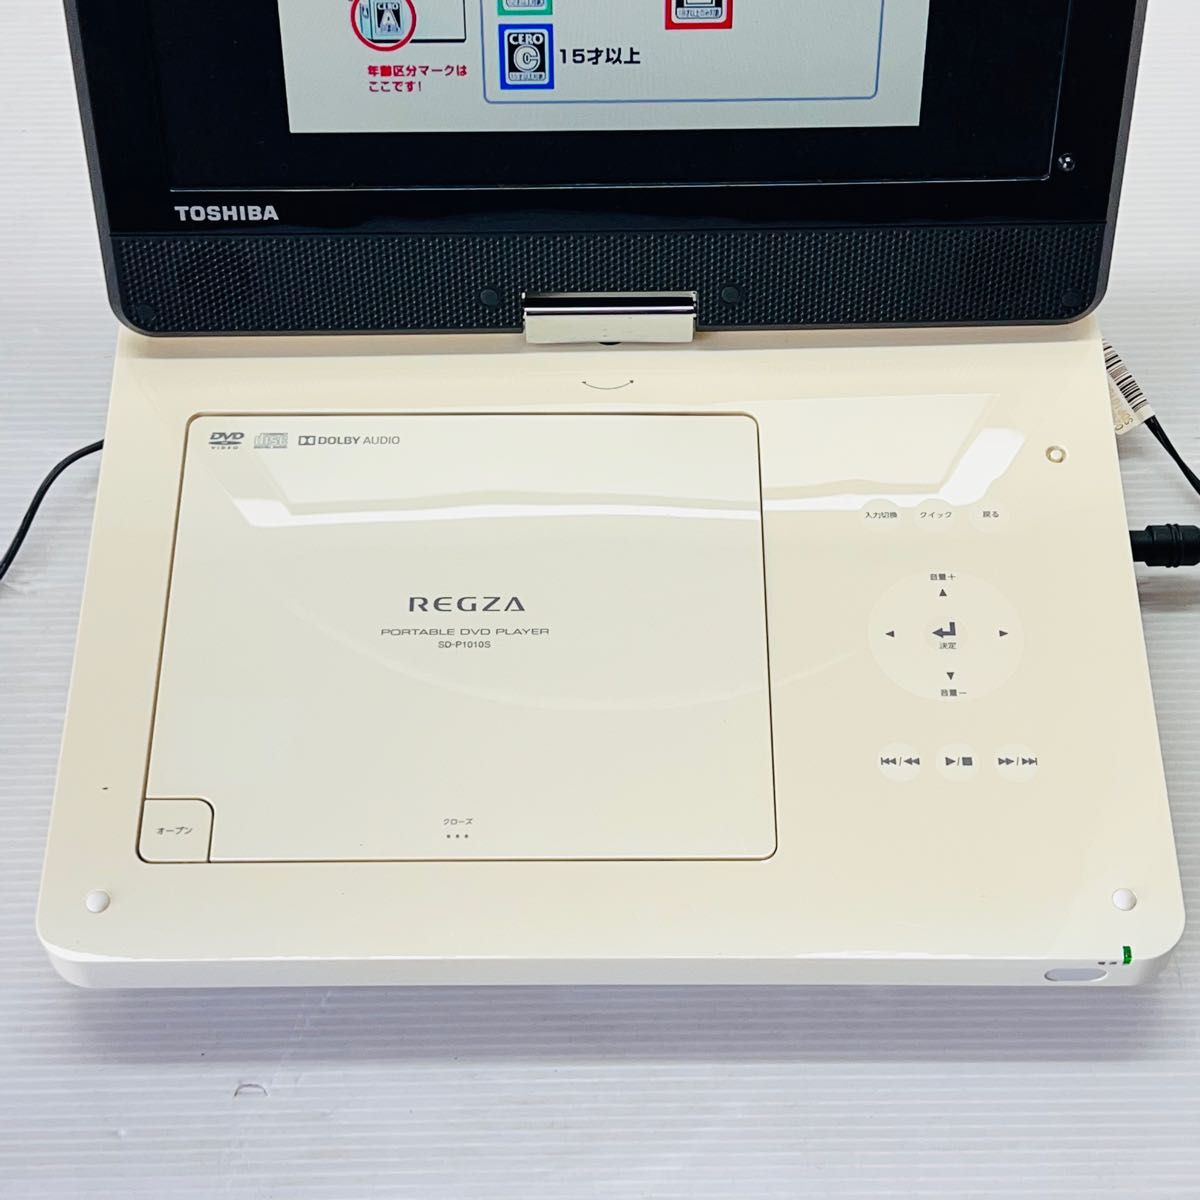 TOSHIBA REGZA ポータブルDVDプレイヤー SD-P1010S 電源ケーブル欠品